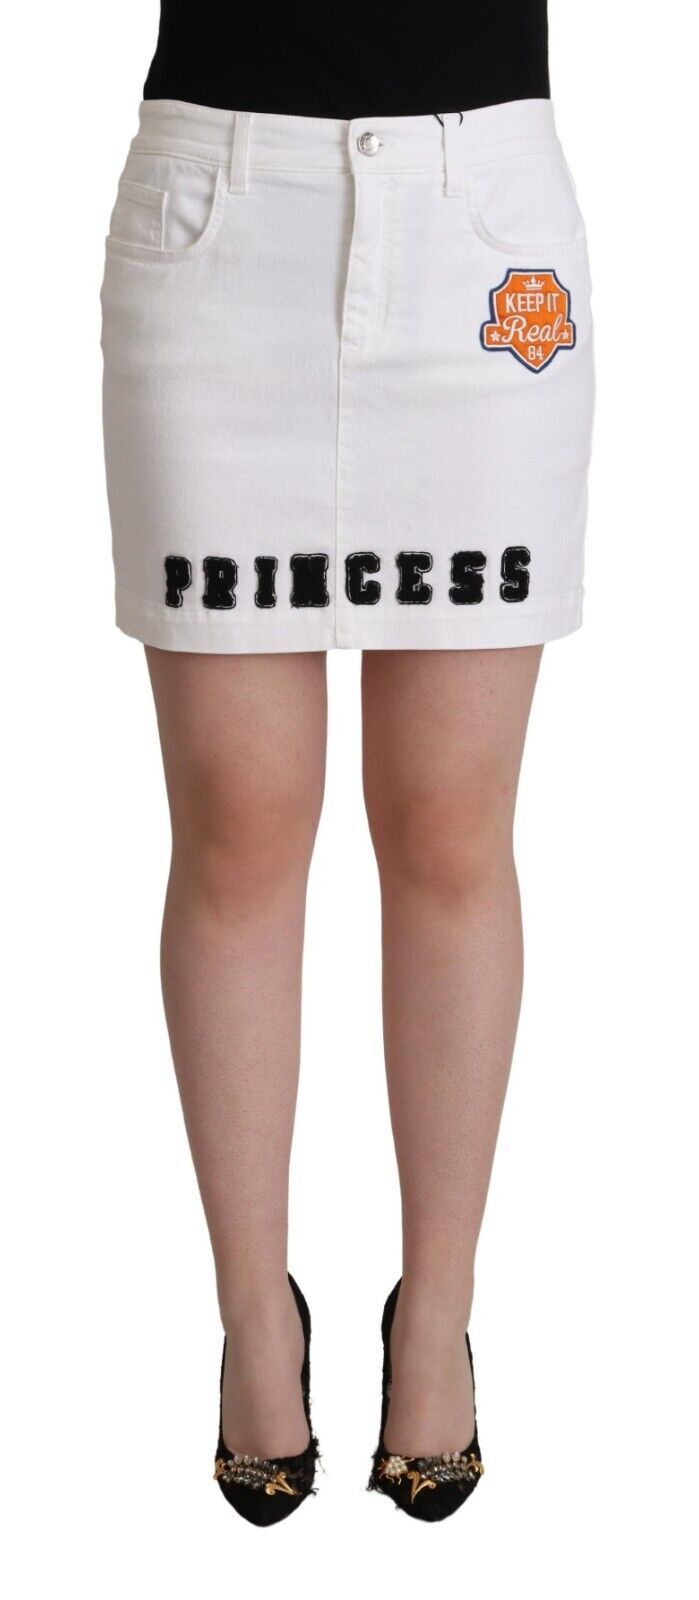 Dolce & Gabbana Chic Embellished White Denim Mini Skirt